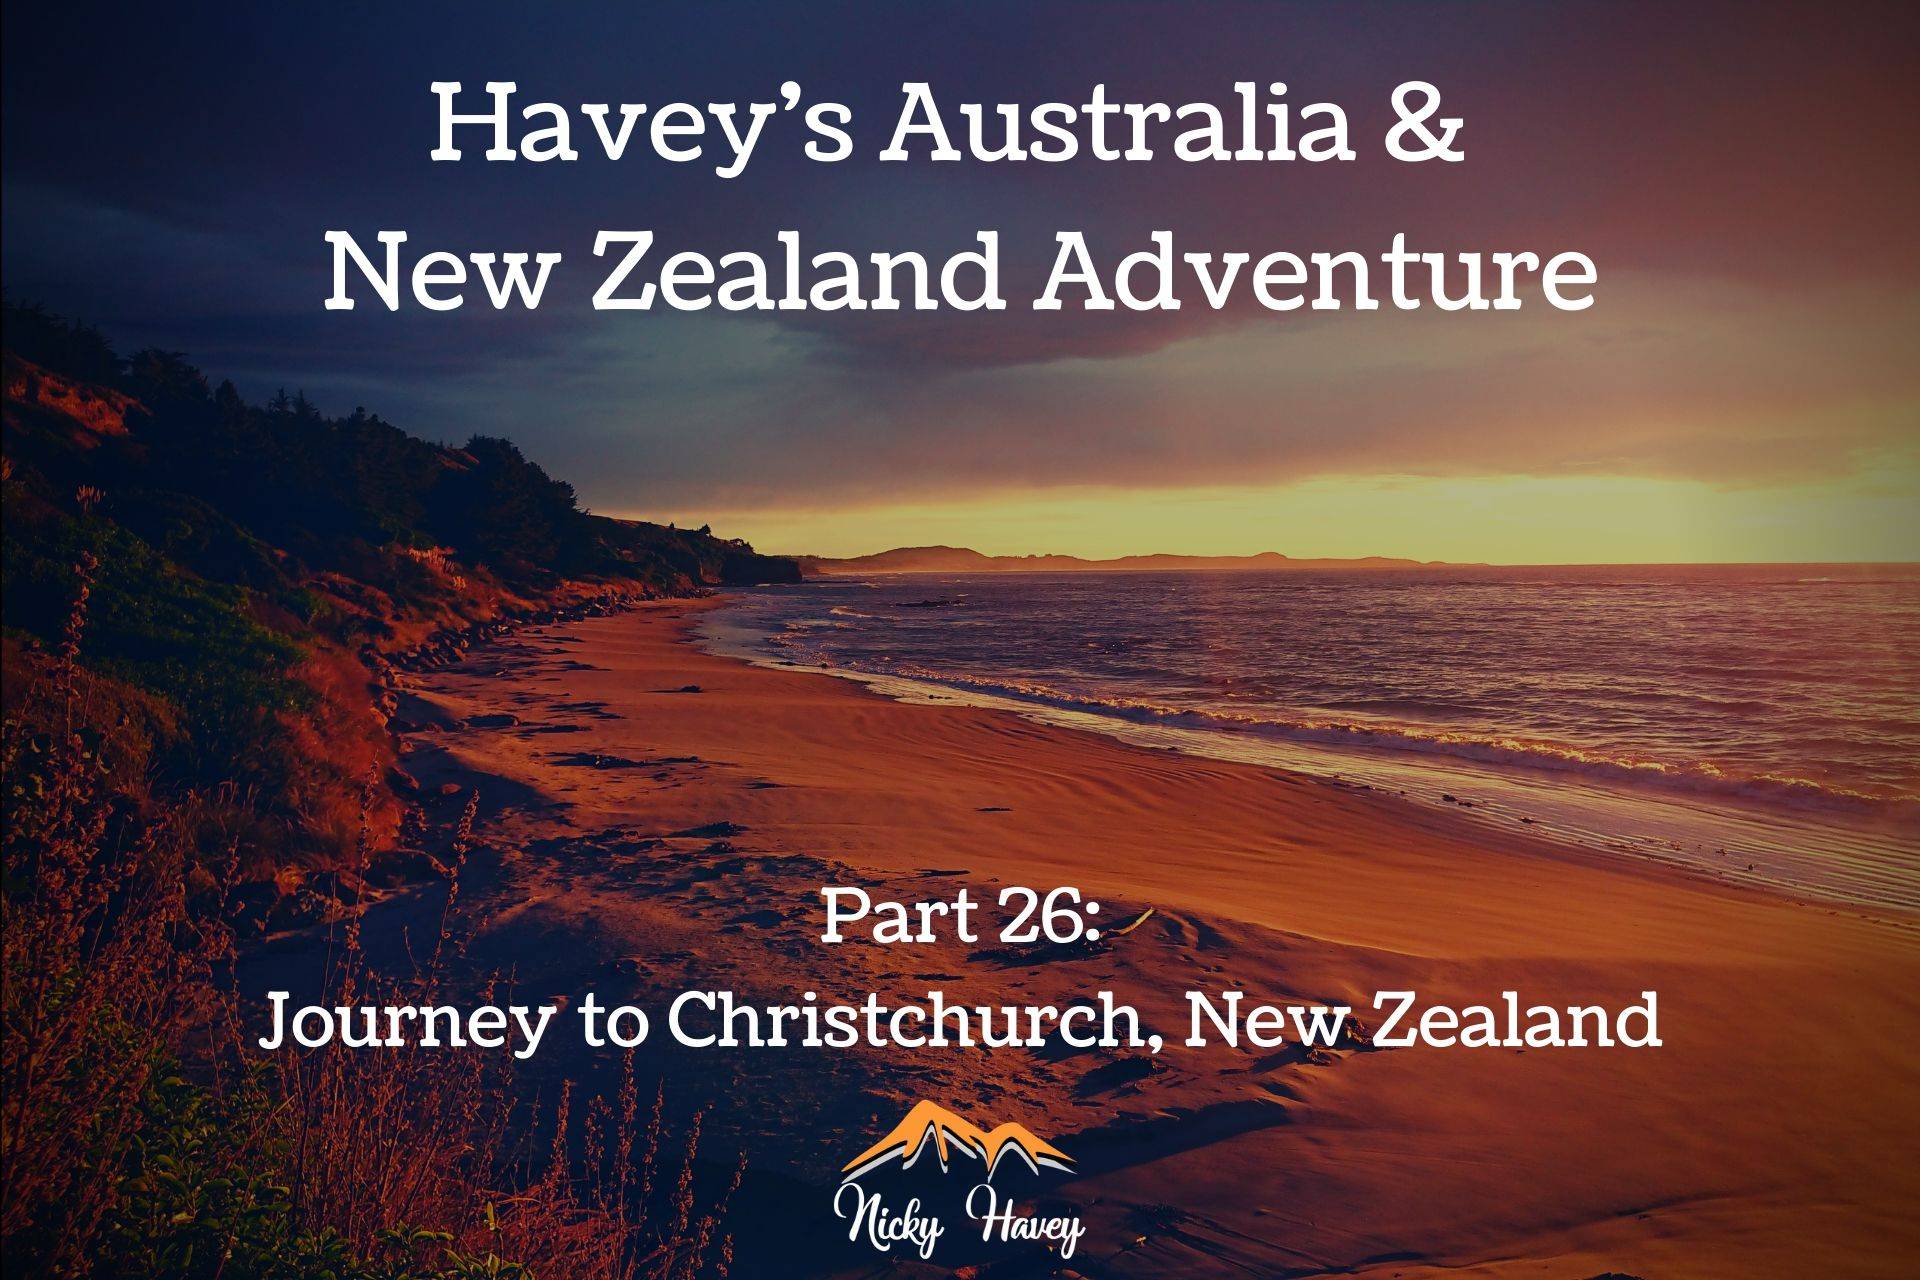 Havey's Australia & New Zealand Adventure Part 26 - Journey to Christchurch, New Zealand